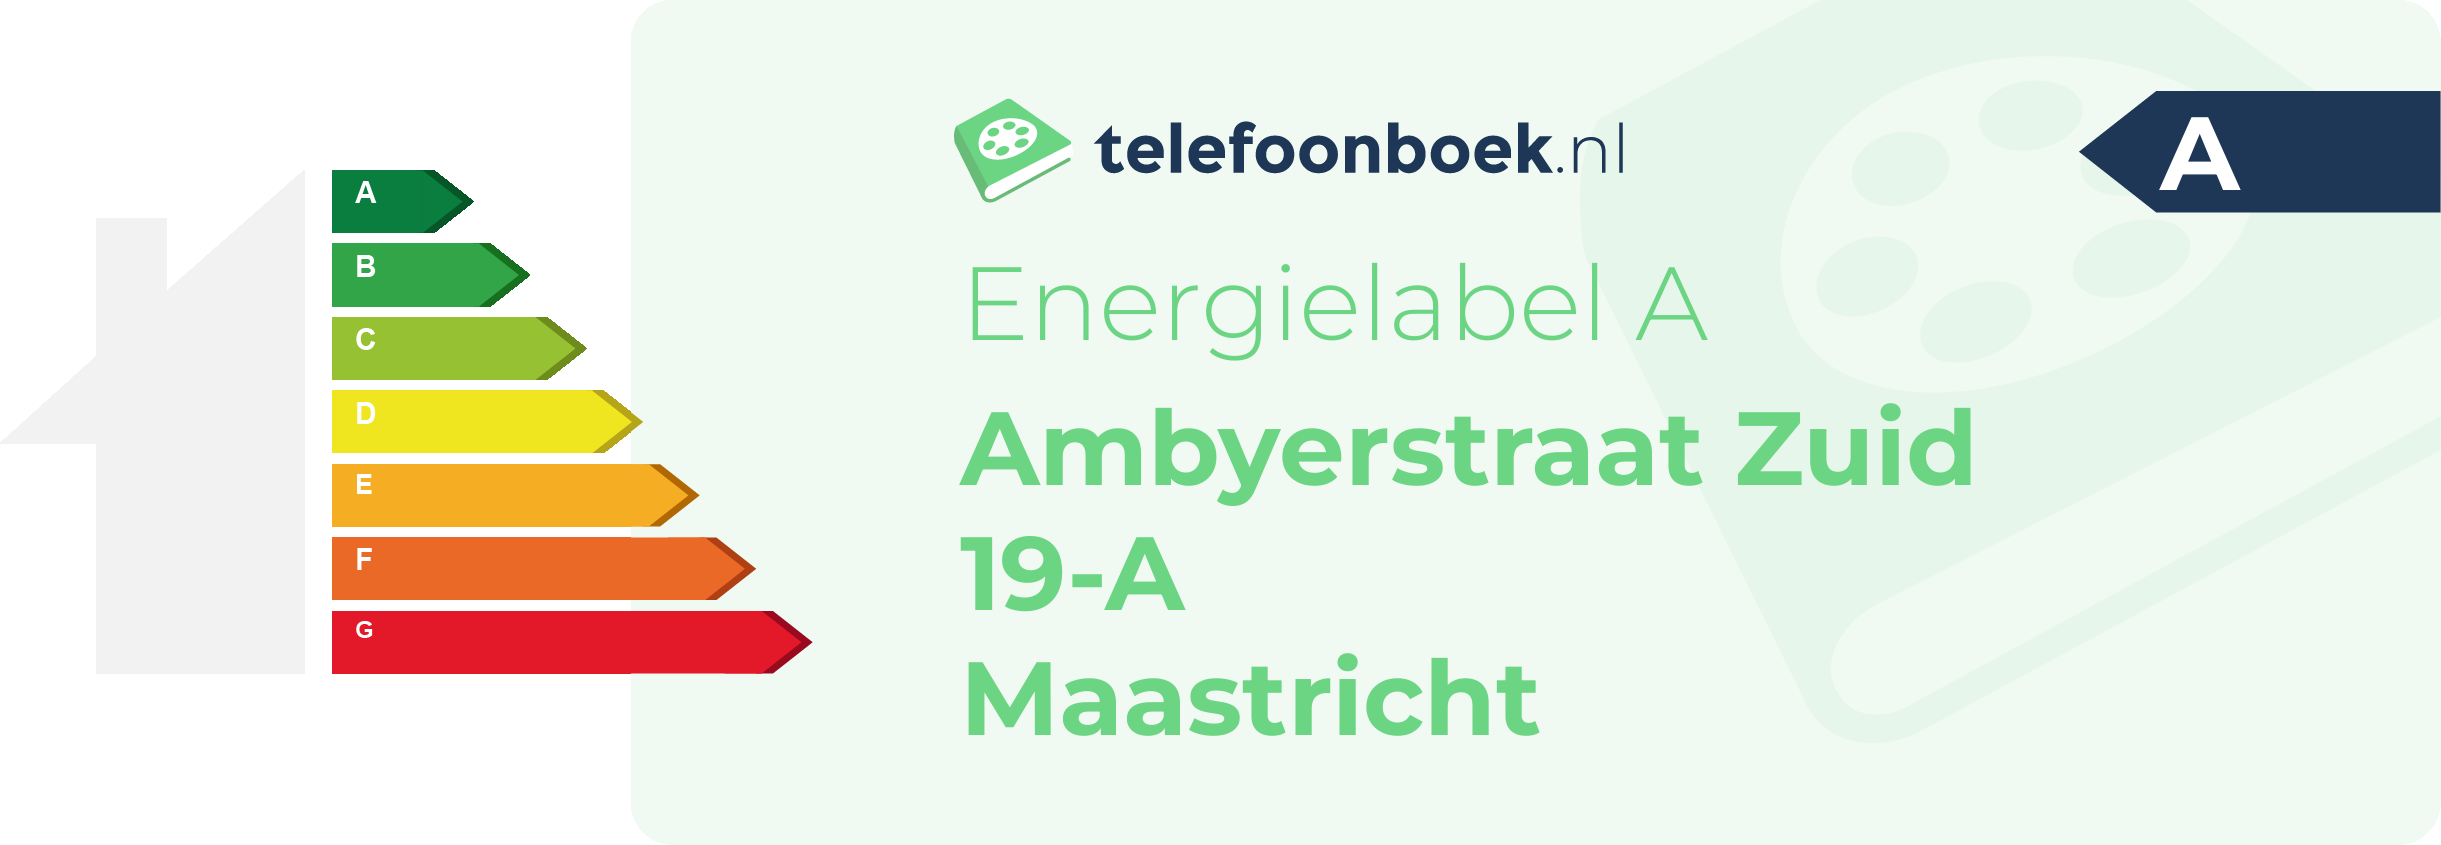 Energielabel Ambyerstraat Zuid 19-A Maastricht